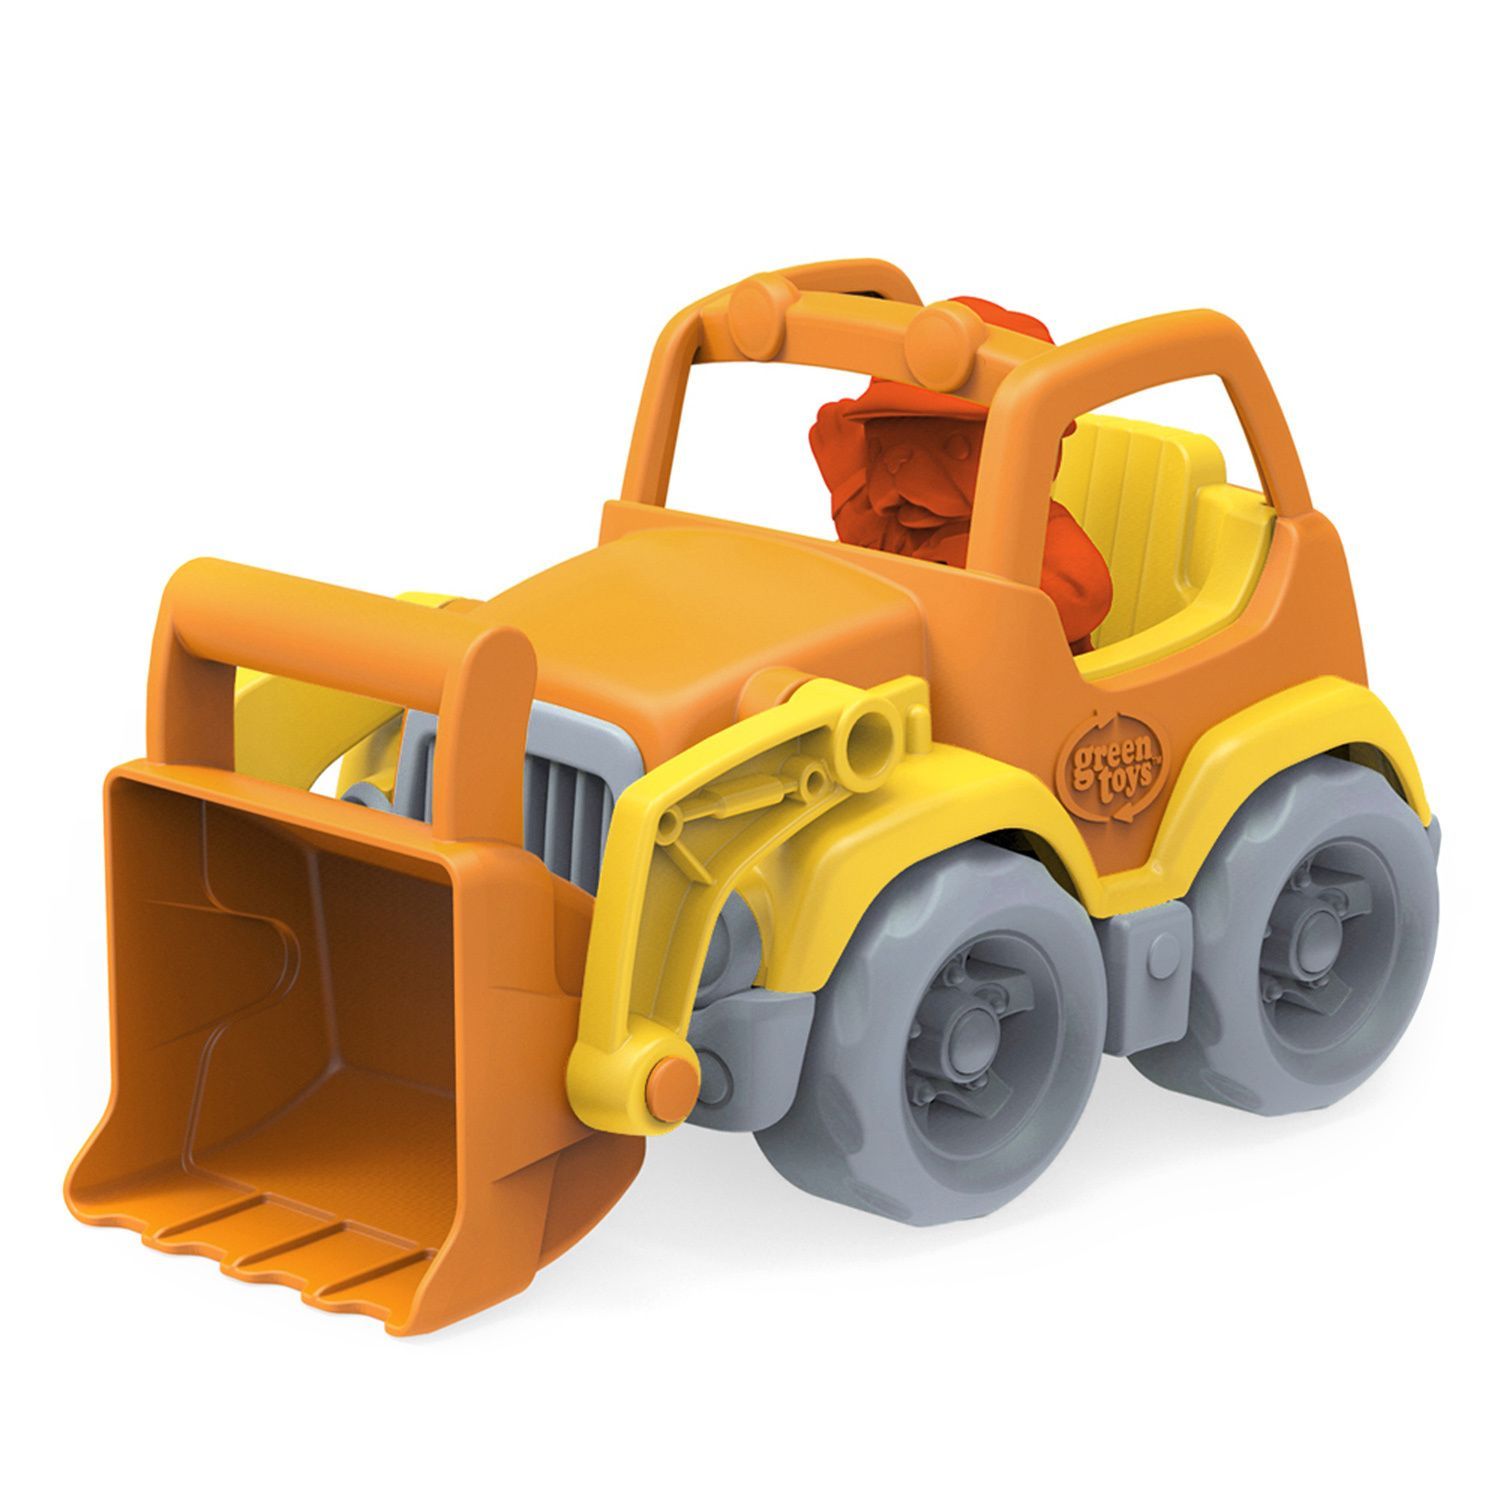 Green Toys Scooper Construction Truck | Toy | Pinterest ...